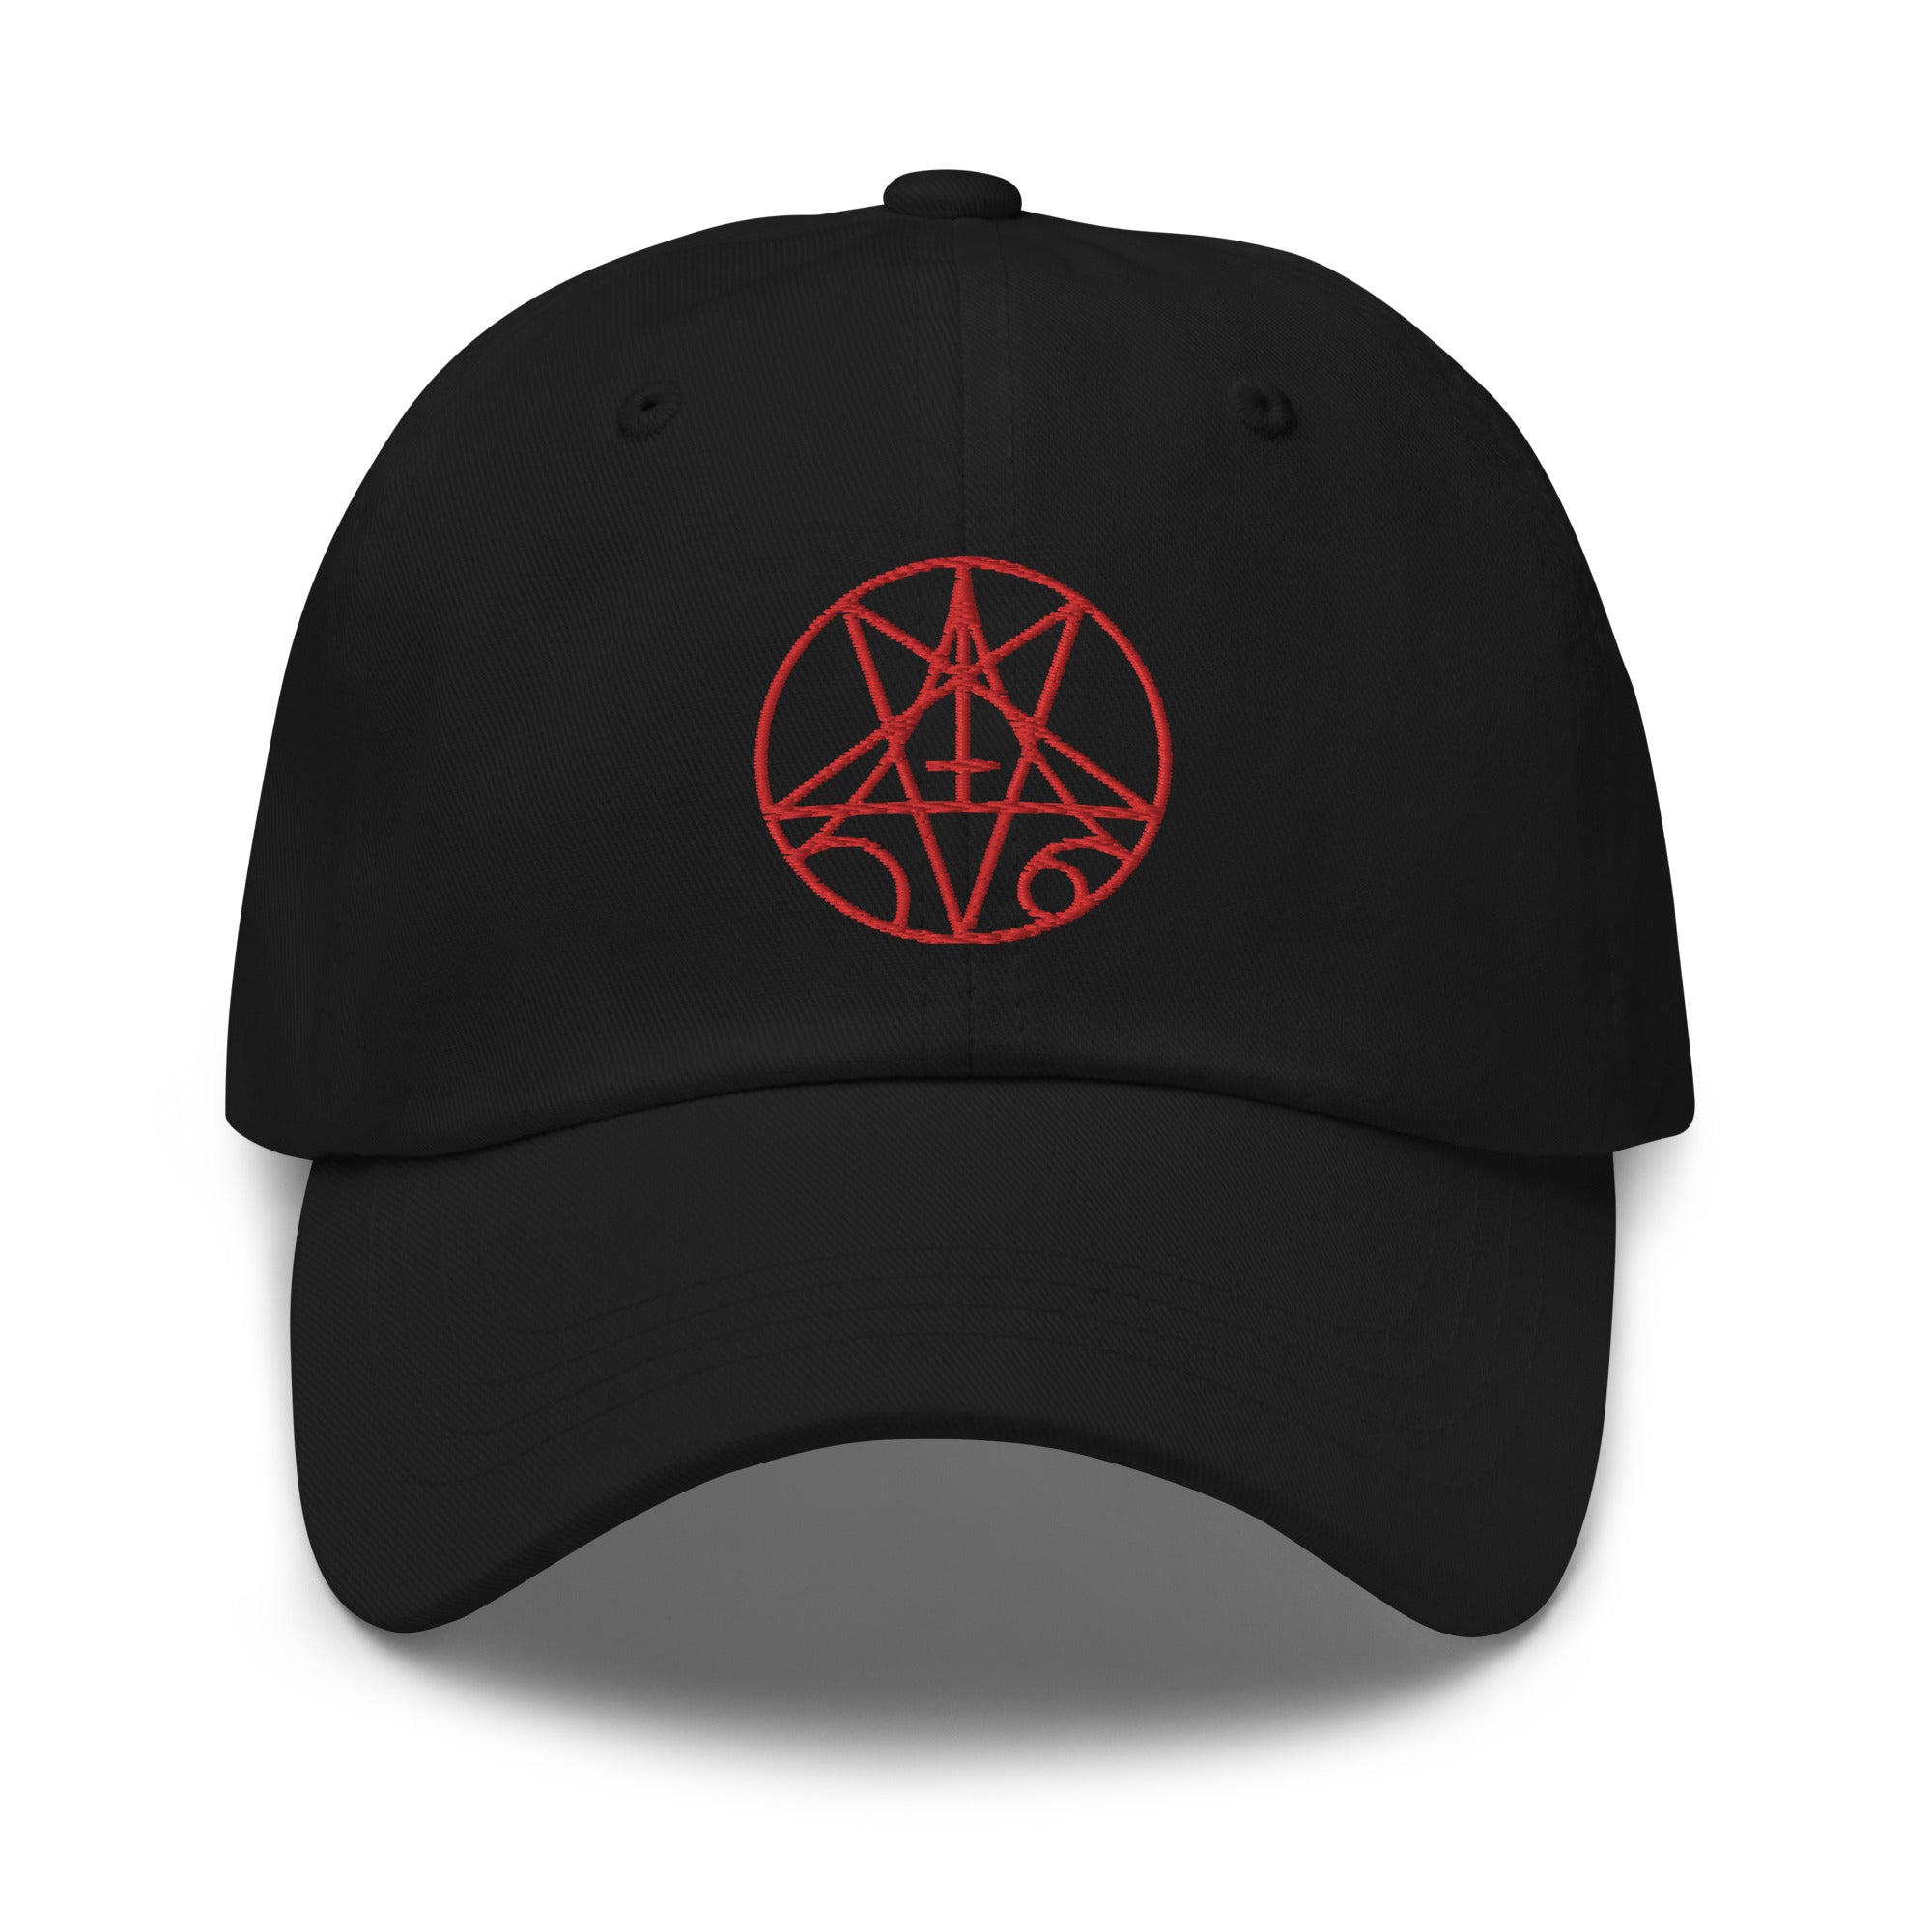 Morbid Death Metal Inverted Pentagram Occult Symbol Embroidered Baseball Cap Dad hat - Edge of Life Designs